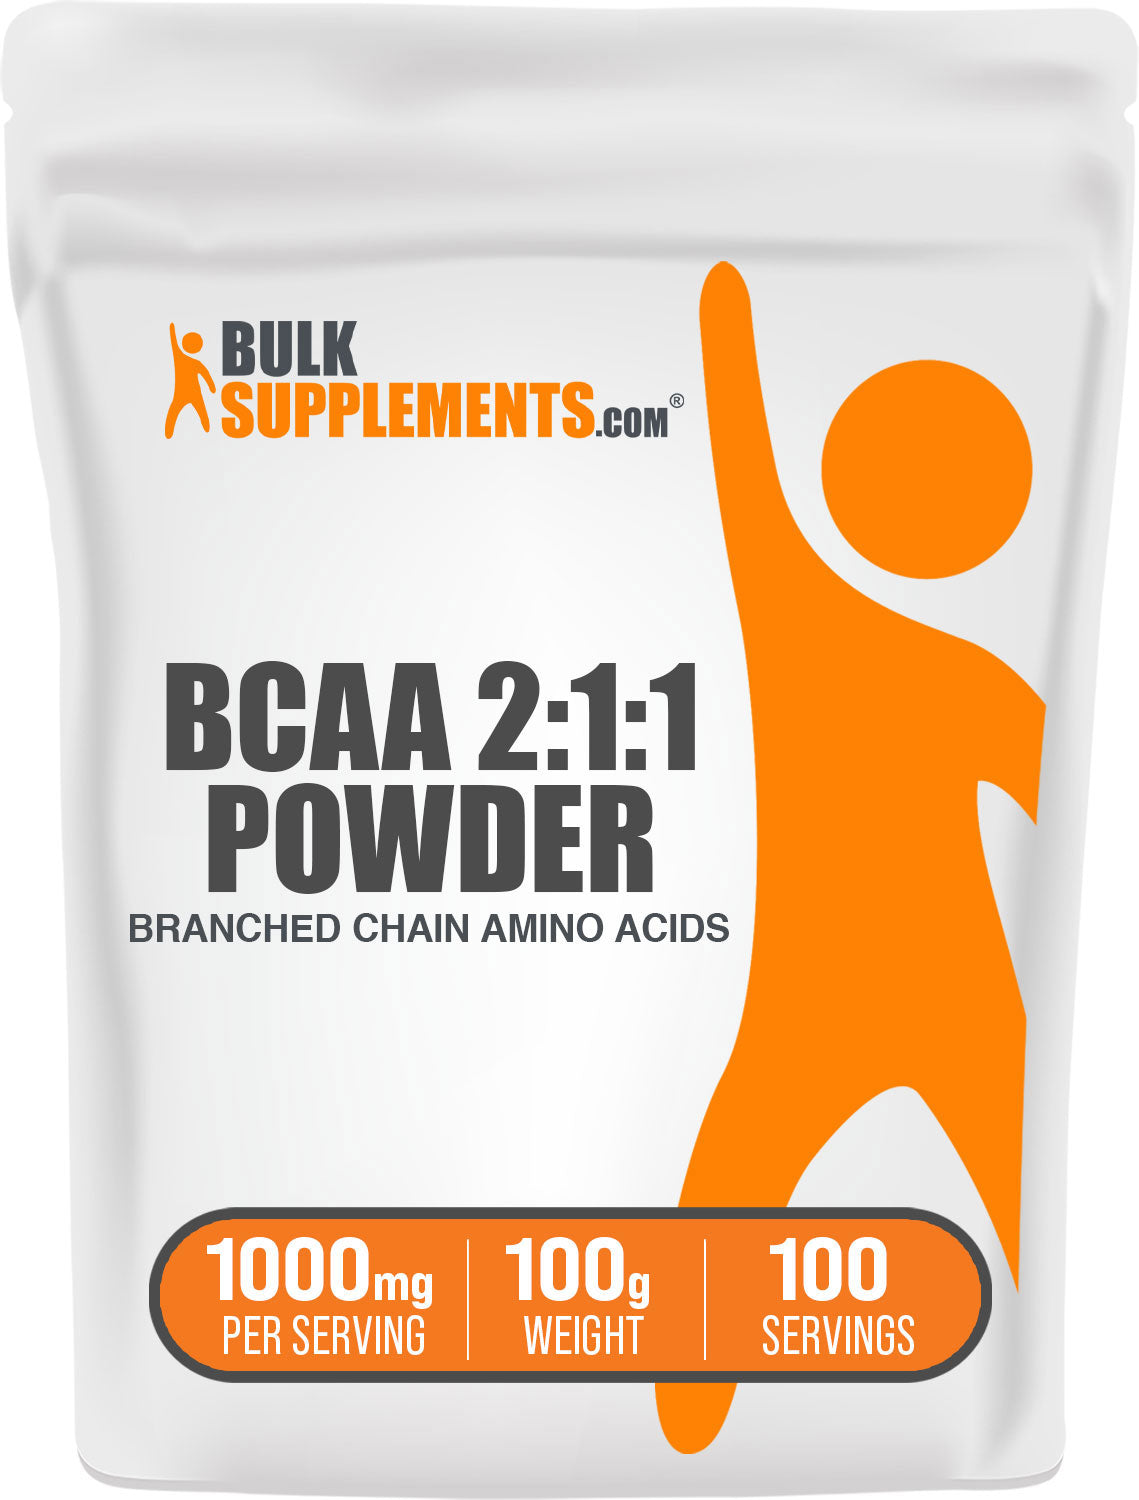 BCAA 2:1:1 Powder 100g bag